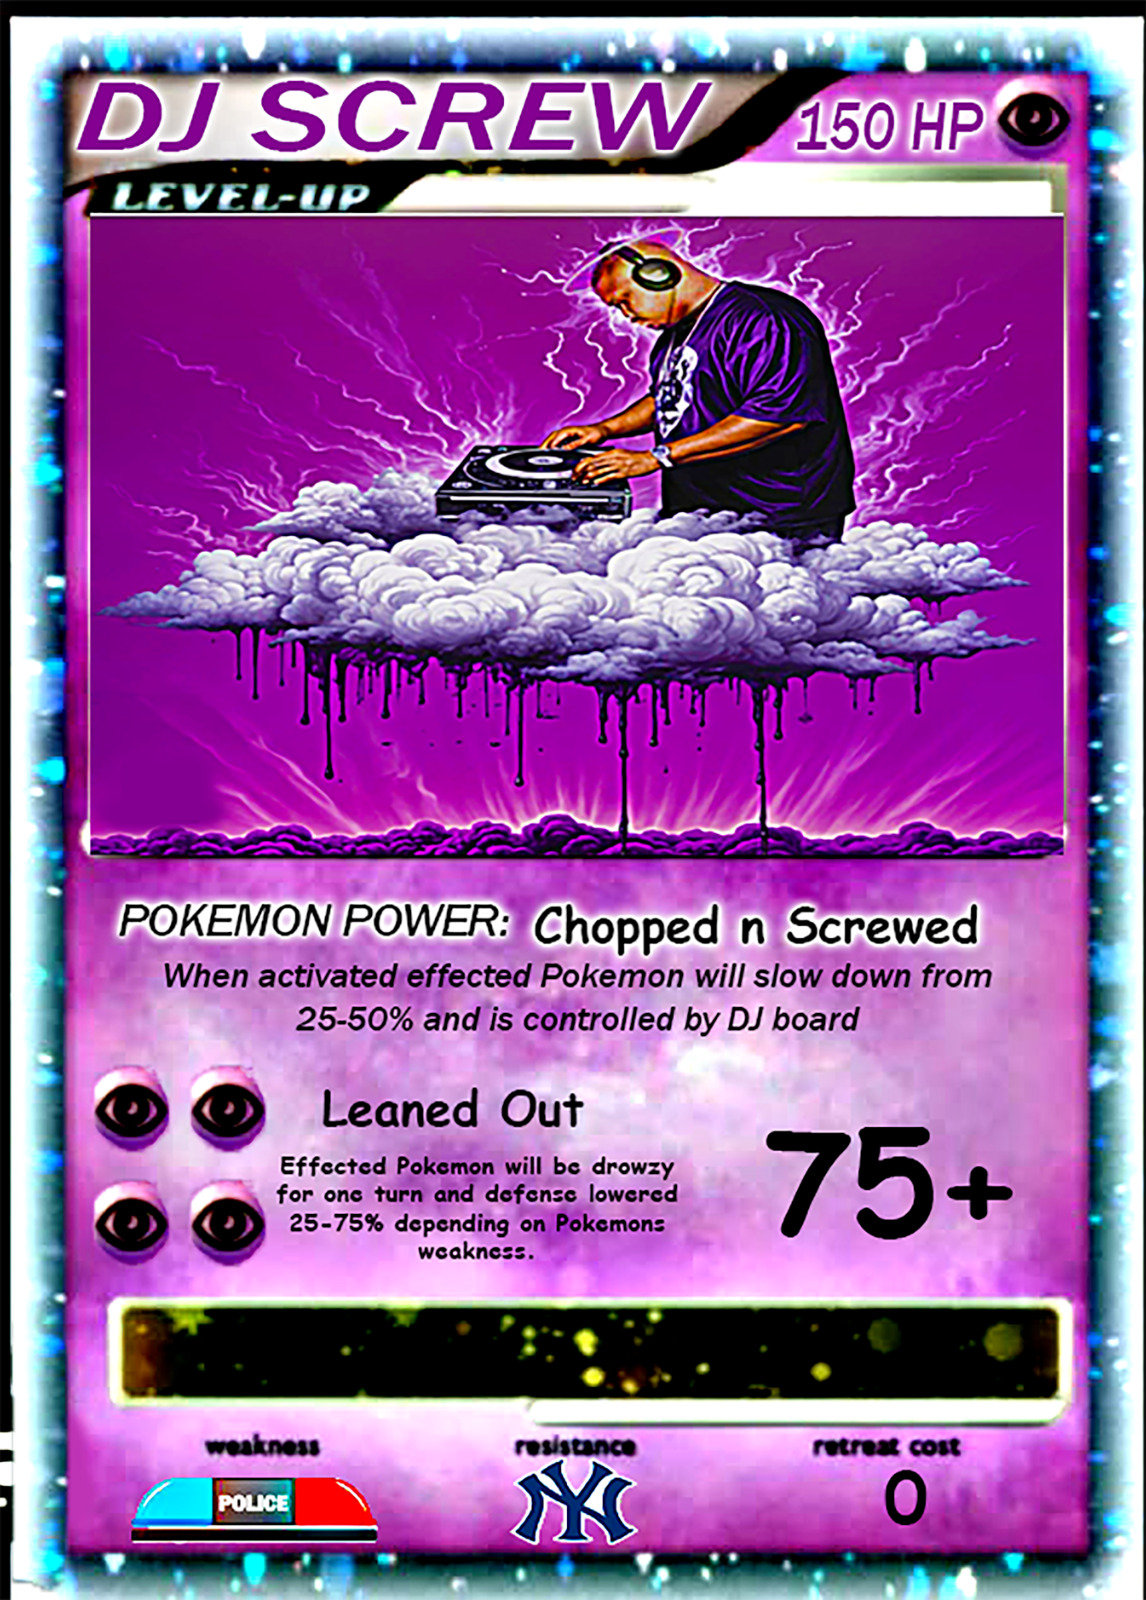 RARE Dj Screw Pokémon Card Wall Art 20x24 4k resolution By Screw Vibez Creations